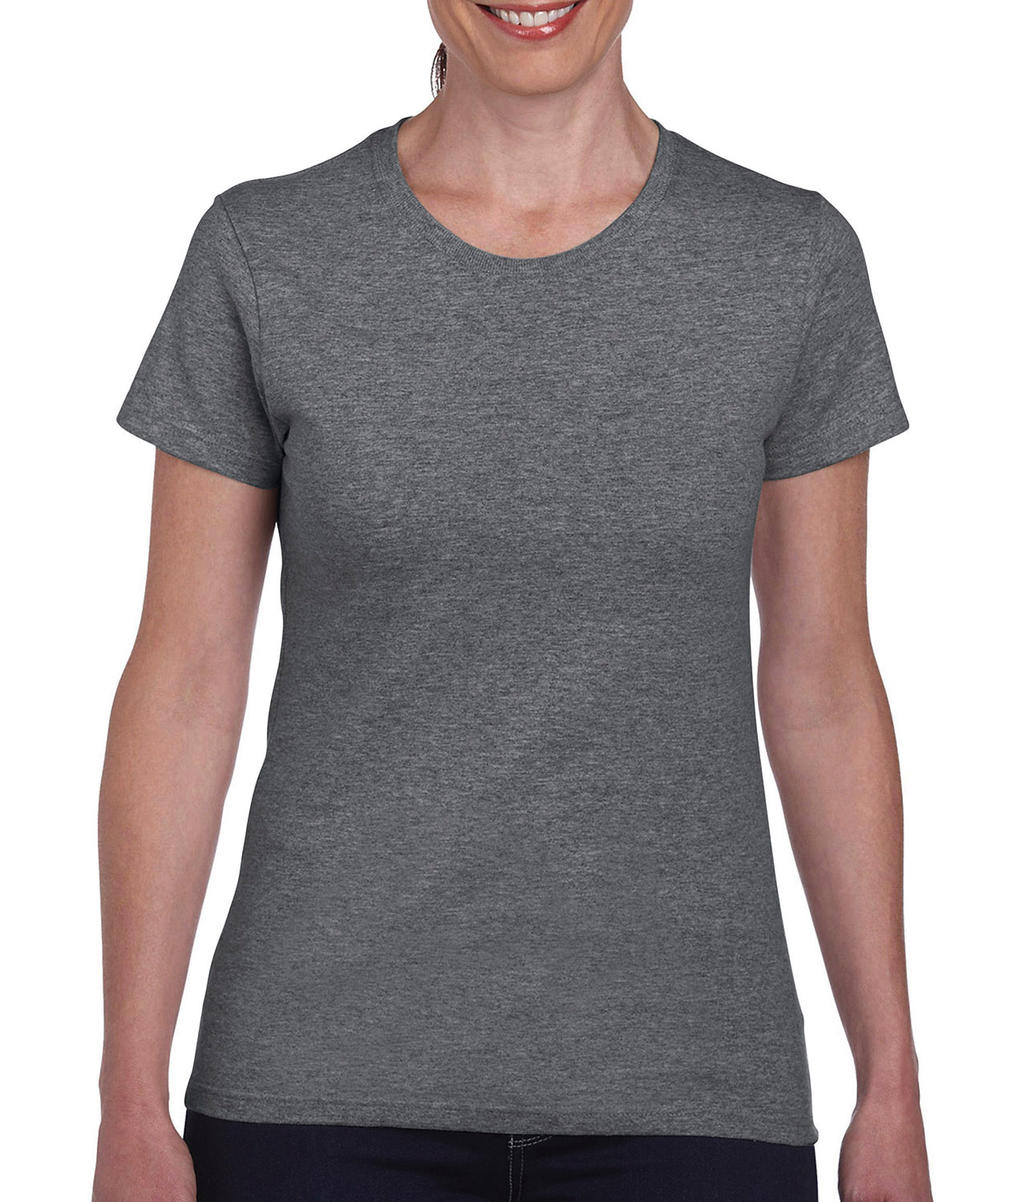  Ladies Heavy Cotton T-Shirt in Farbe Graphite Heather